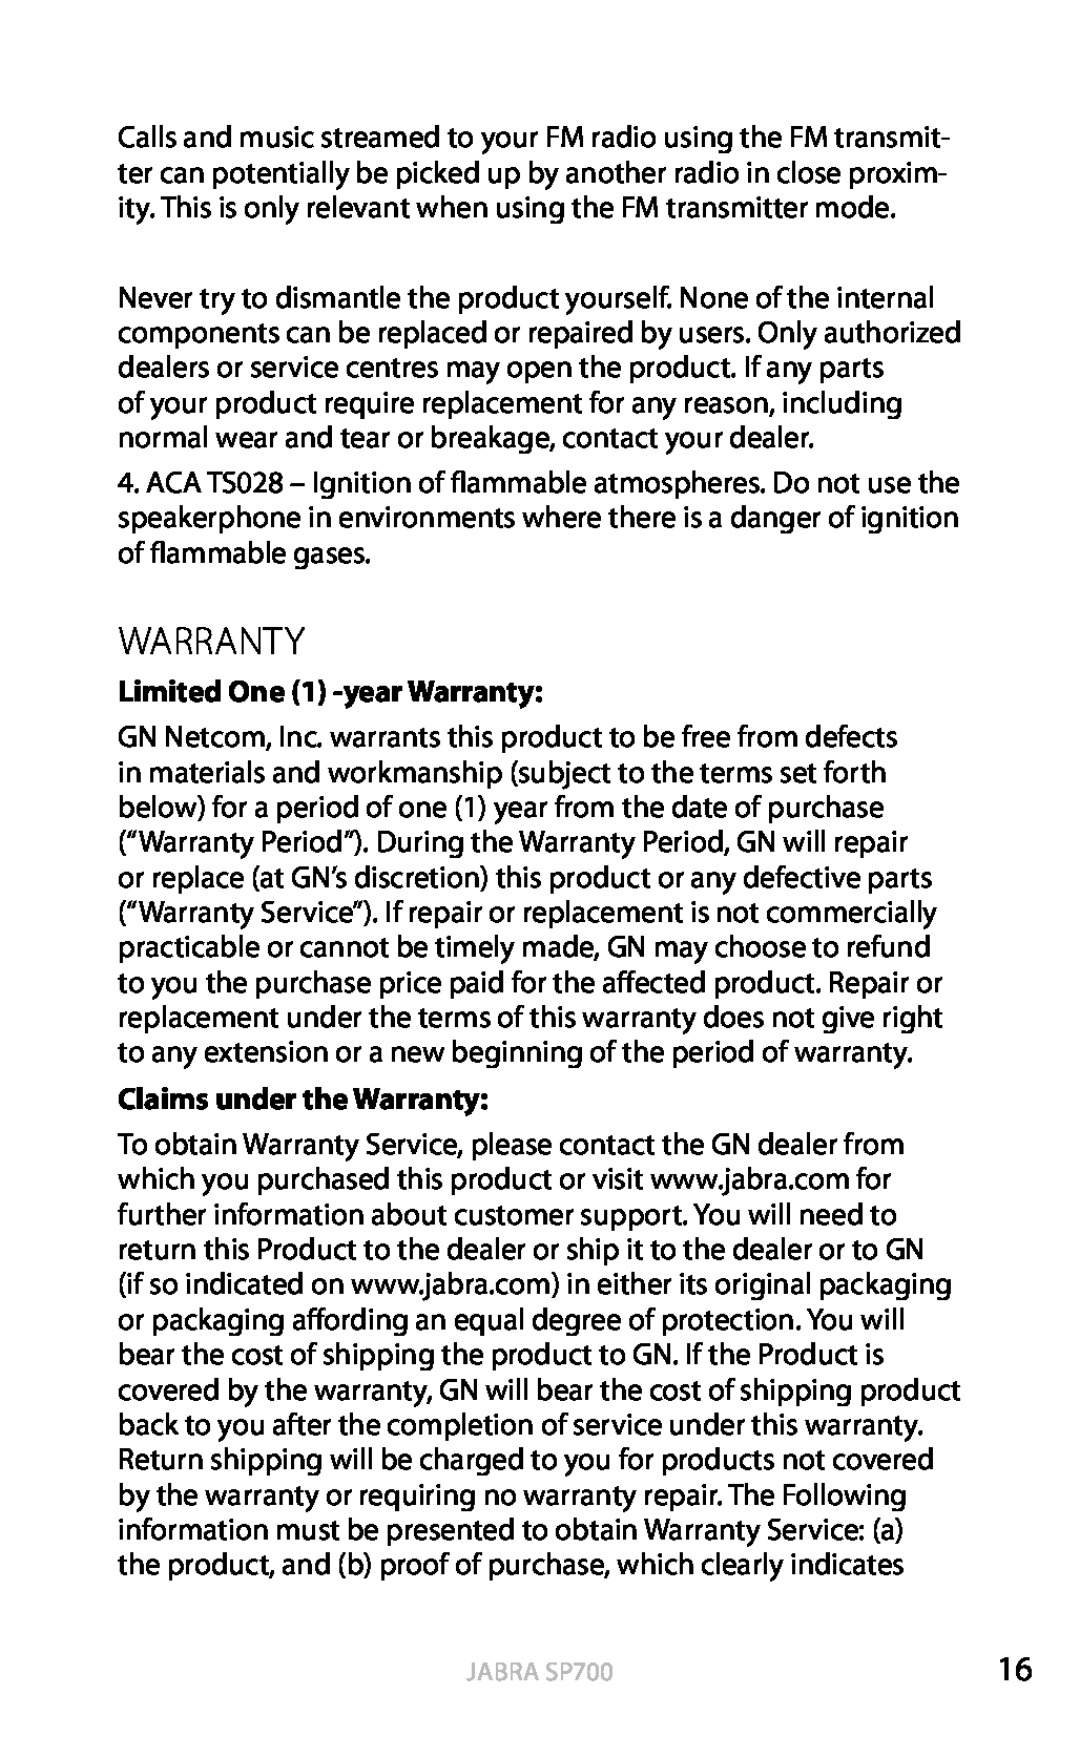 Jabra user manual Limited One 1 -yearWarranty, Claims under the Warranty, english, Jabra SP700 